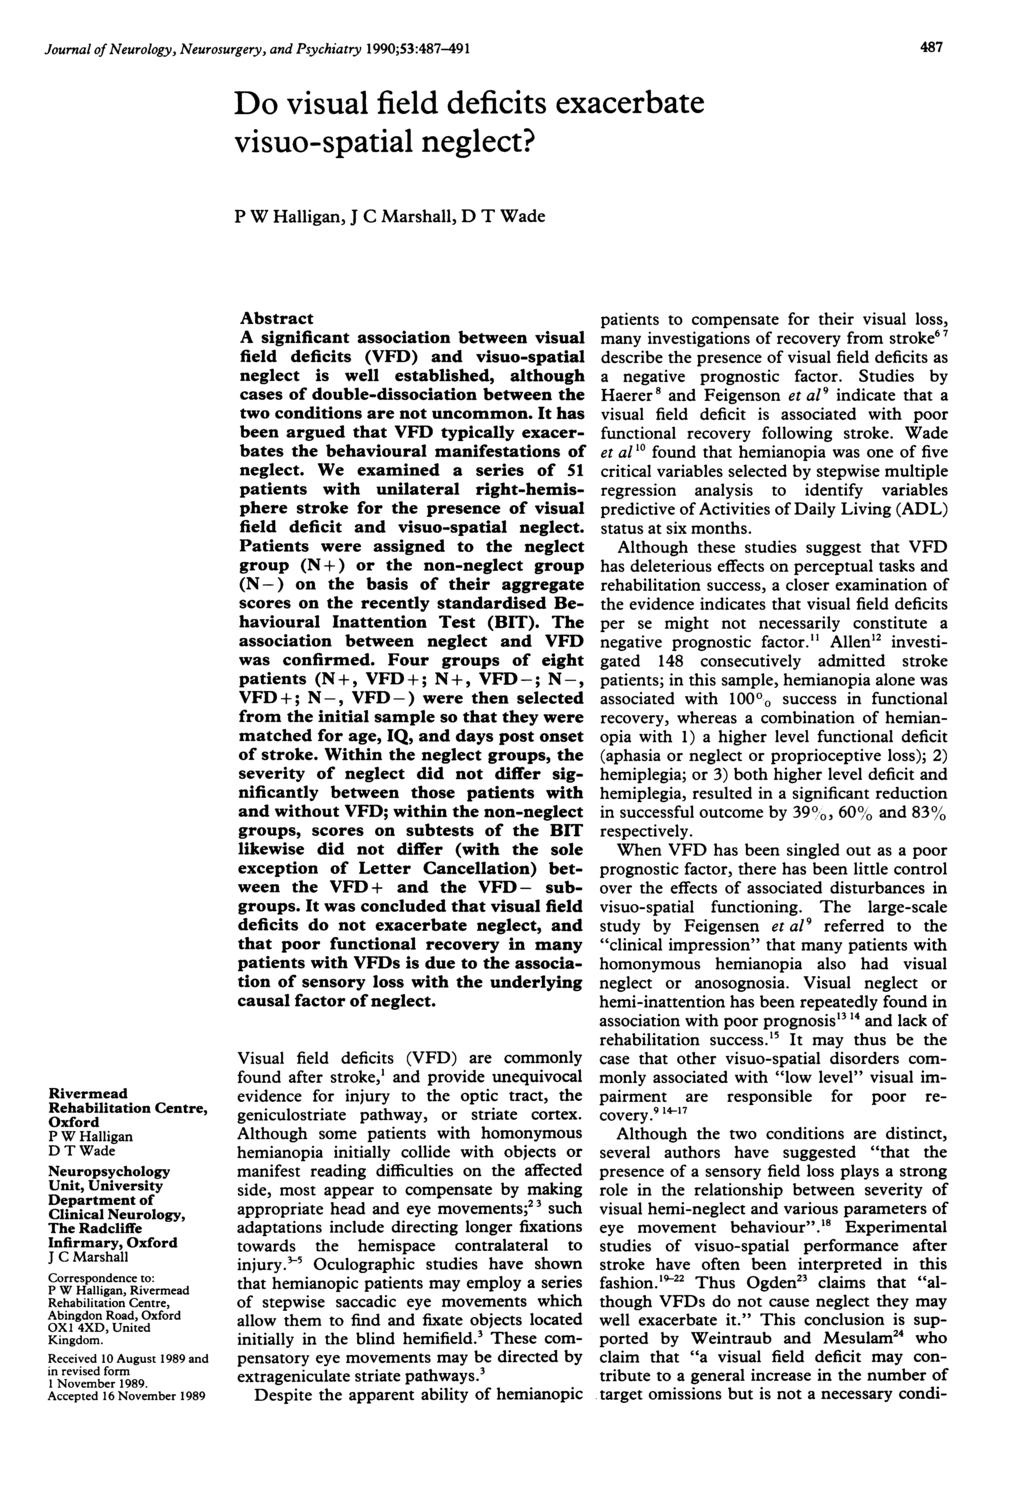 Journal of Neurology, Neurosurgery, and Psychiatry 1990;53:487-491 Rivermead Rehabilitation Centre, Oxford P W Halligan D T Wade Neuropsychology Unit, University Department of Clinical Neurology, The